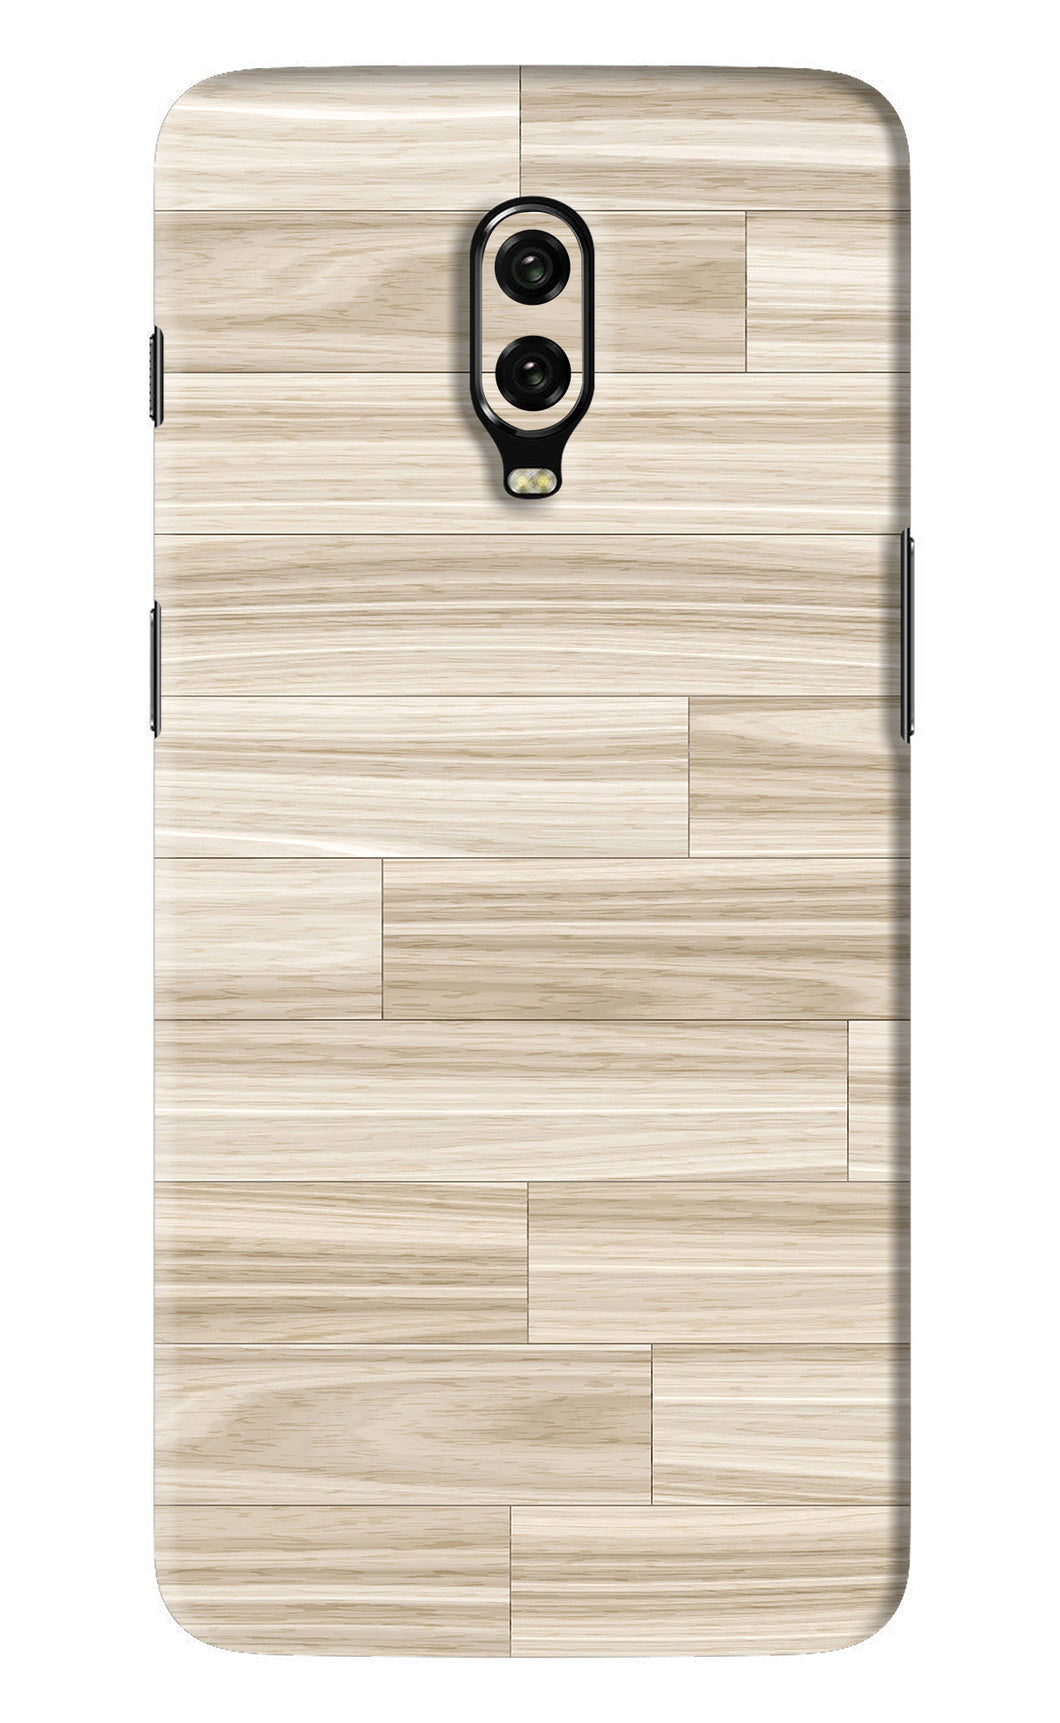 Wooden Art Texture OnePlus 6T Back Skin Wrap